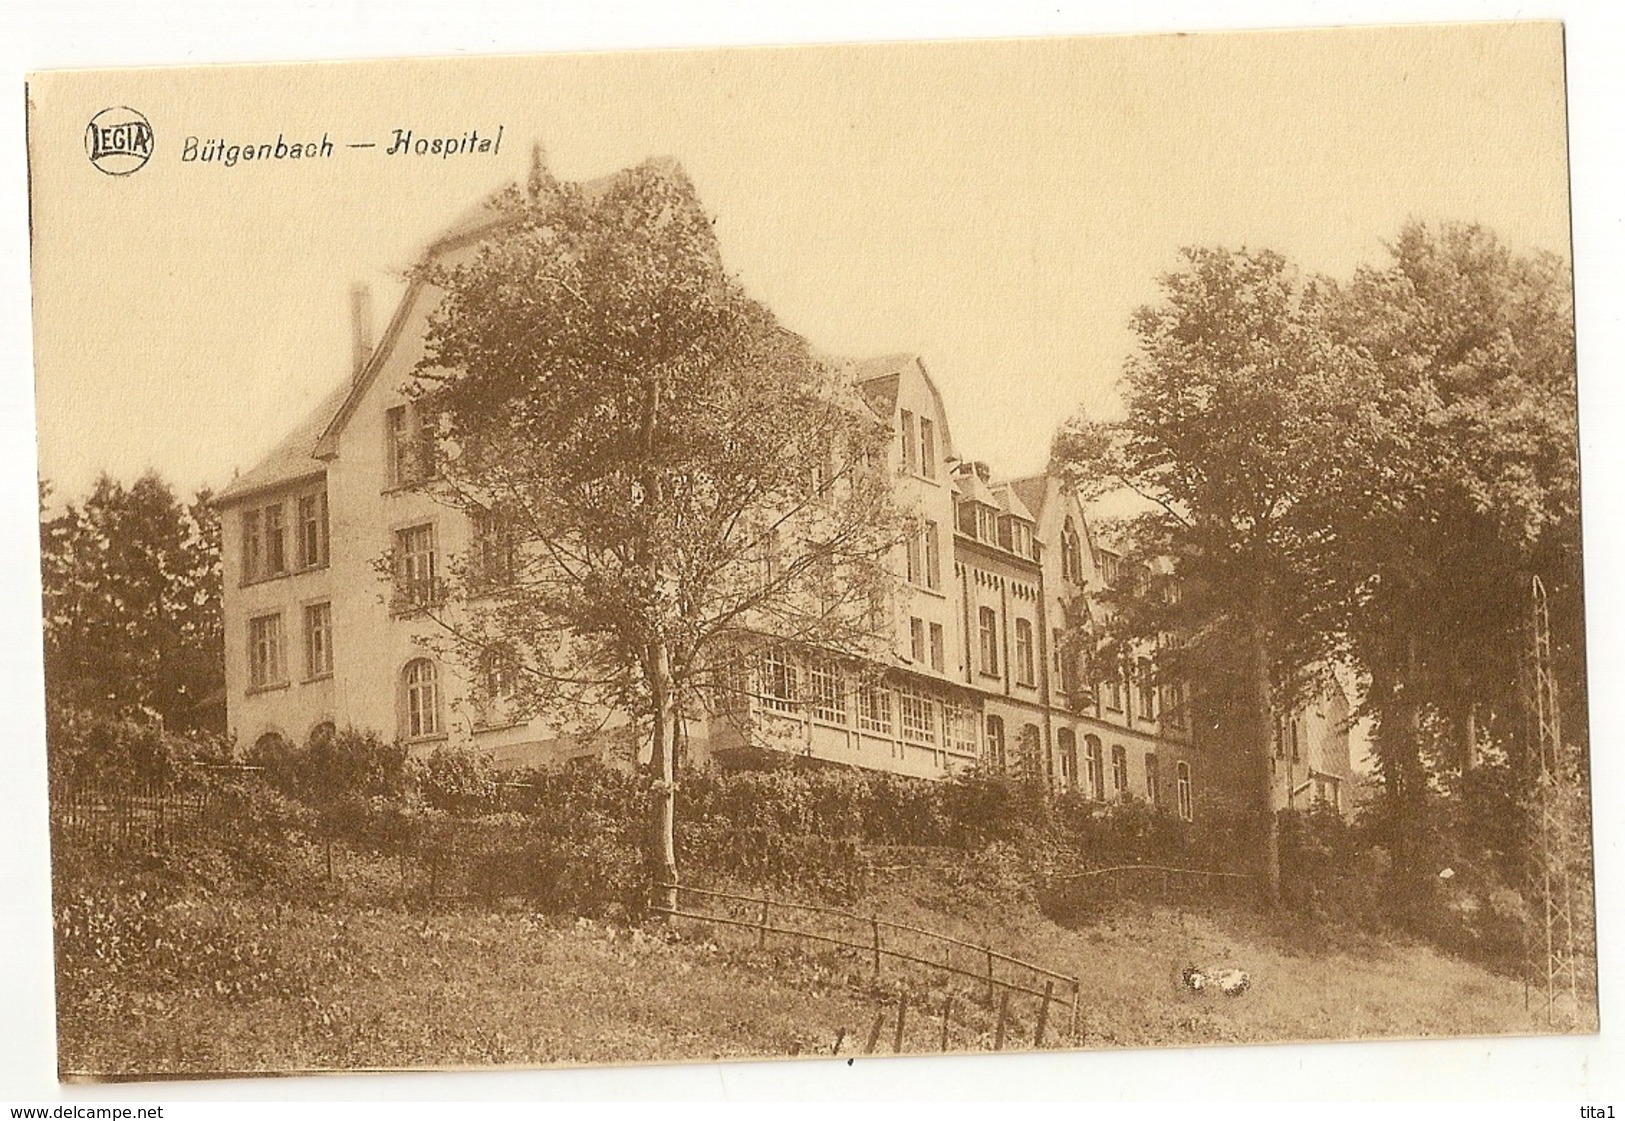 4 - Bütgenbach - Hospital - Butgenbach - Buetgenbach